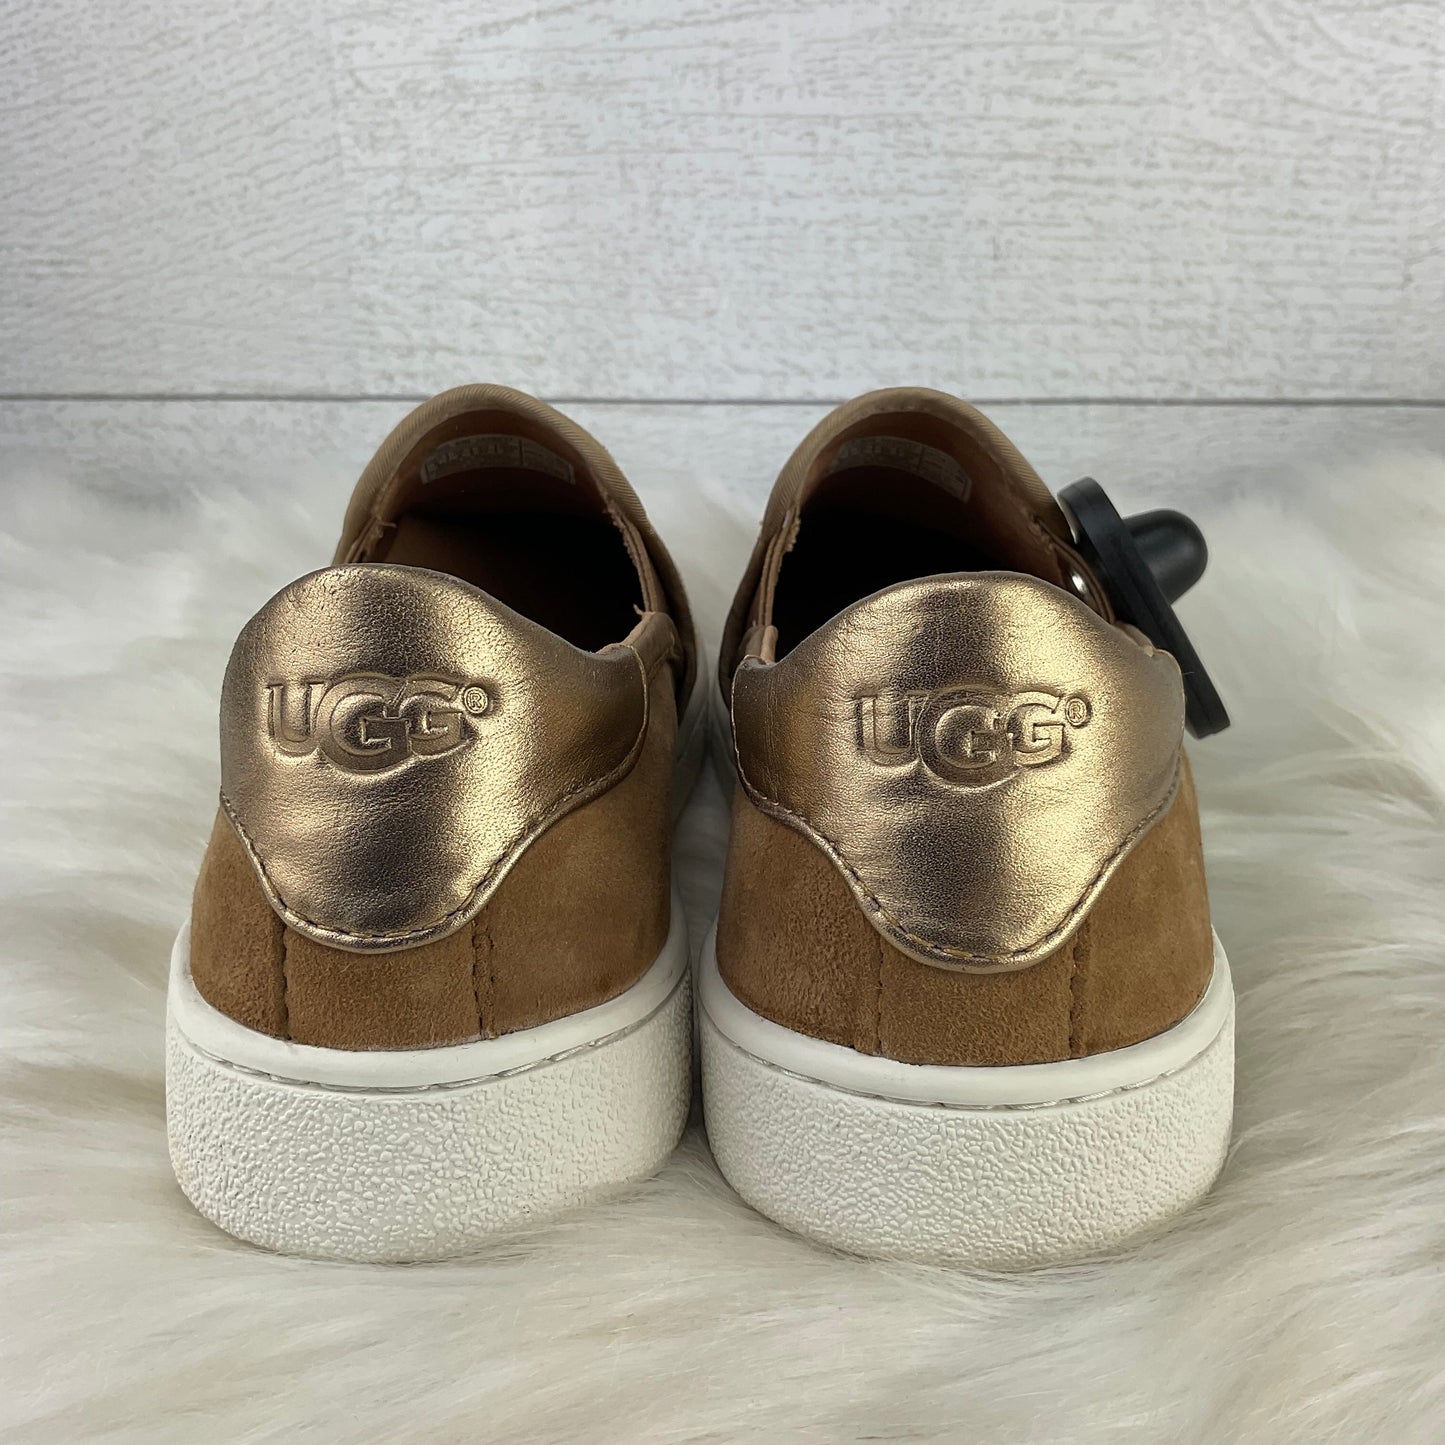 Shoes Designer By Ugg  Size: 6